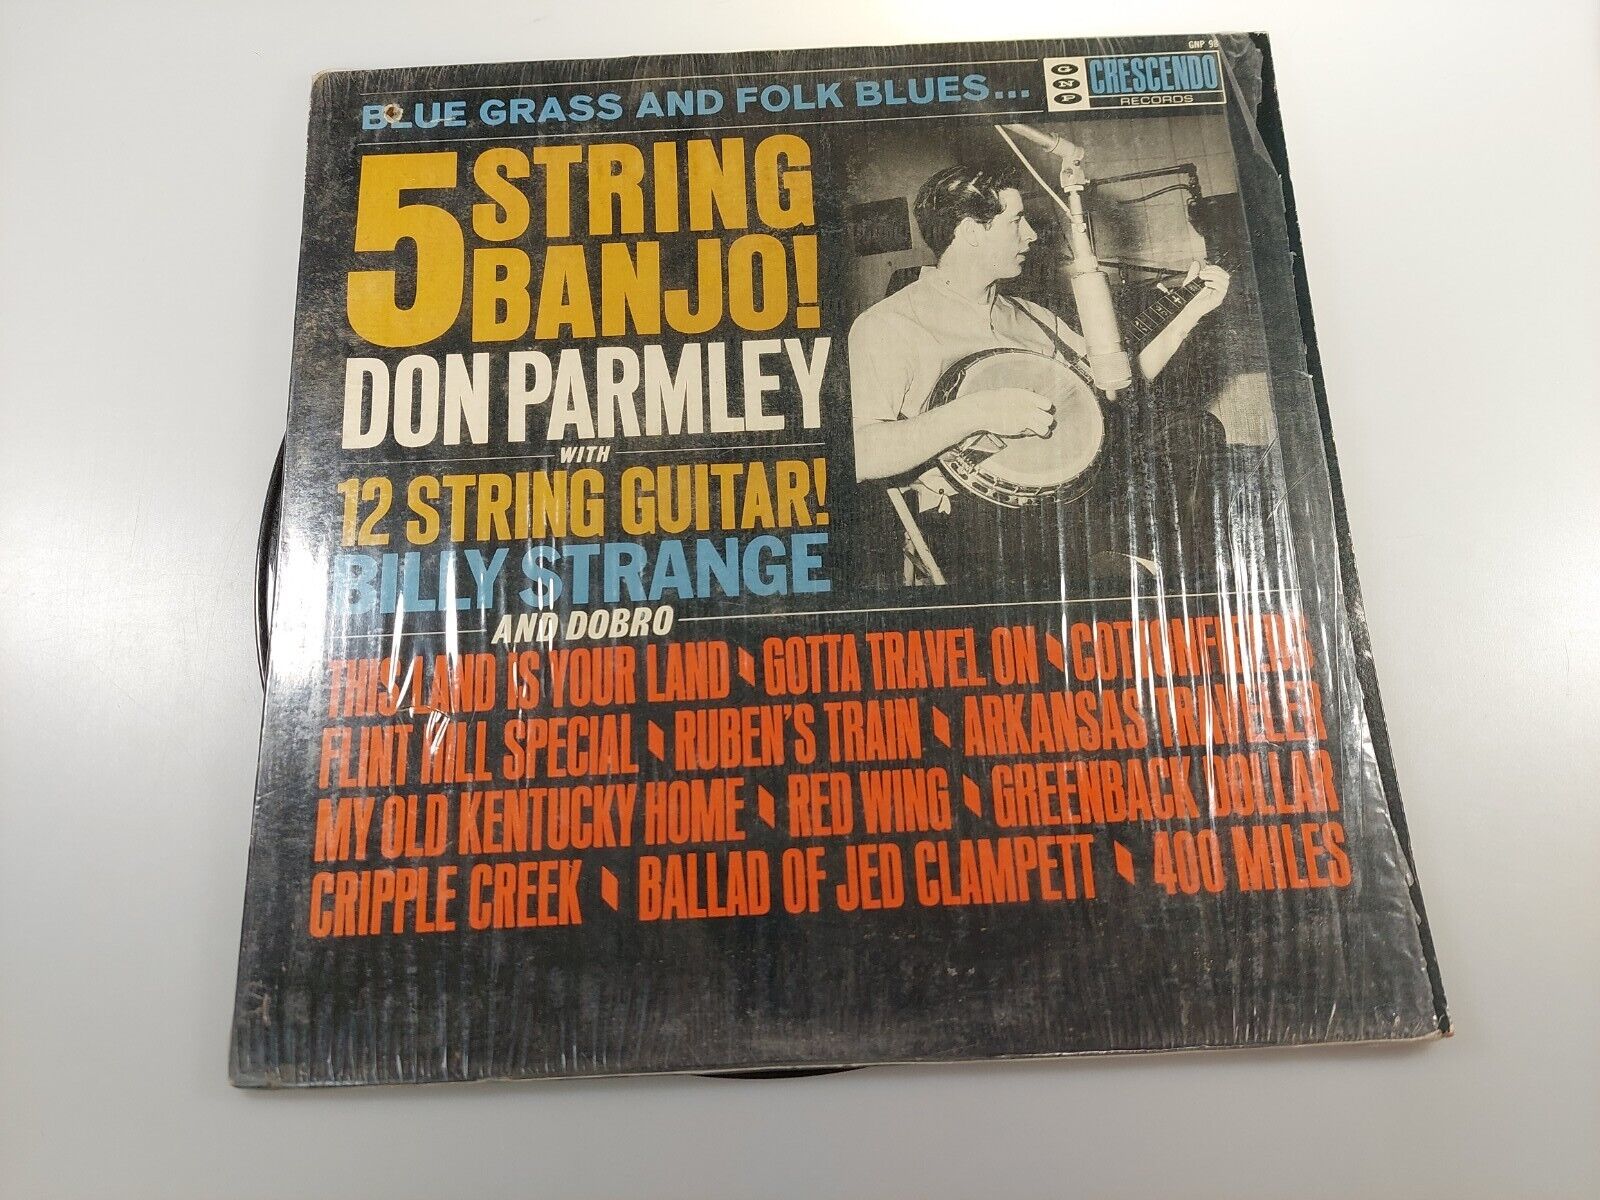 DON PARMLEY+BILLY STRANGE /5 STRING BANJO VTG VINYL LP  